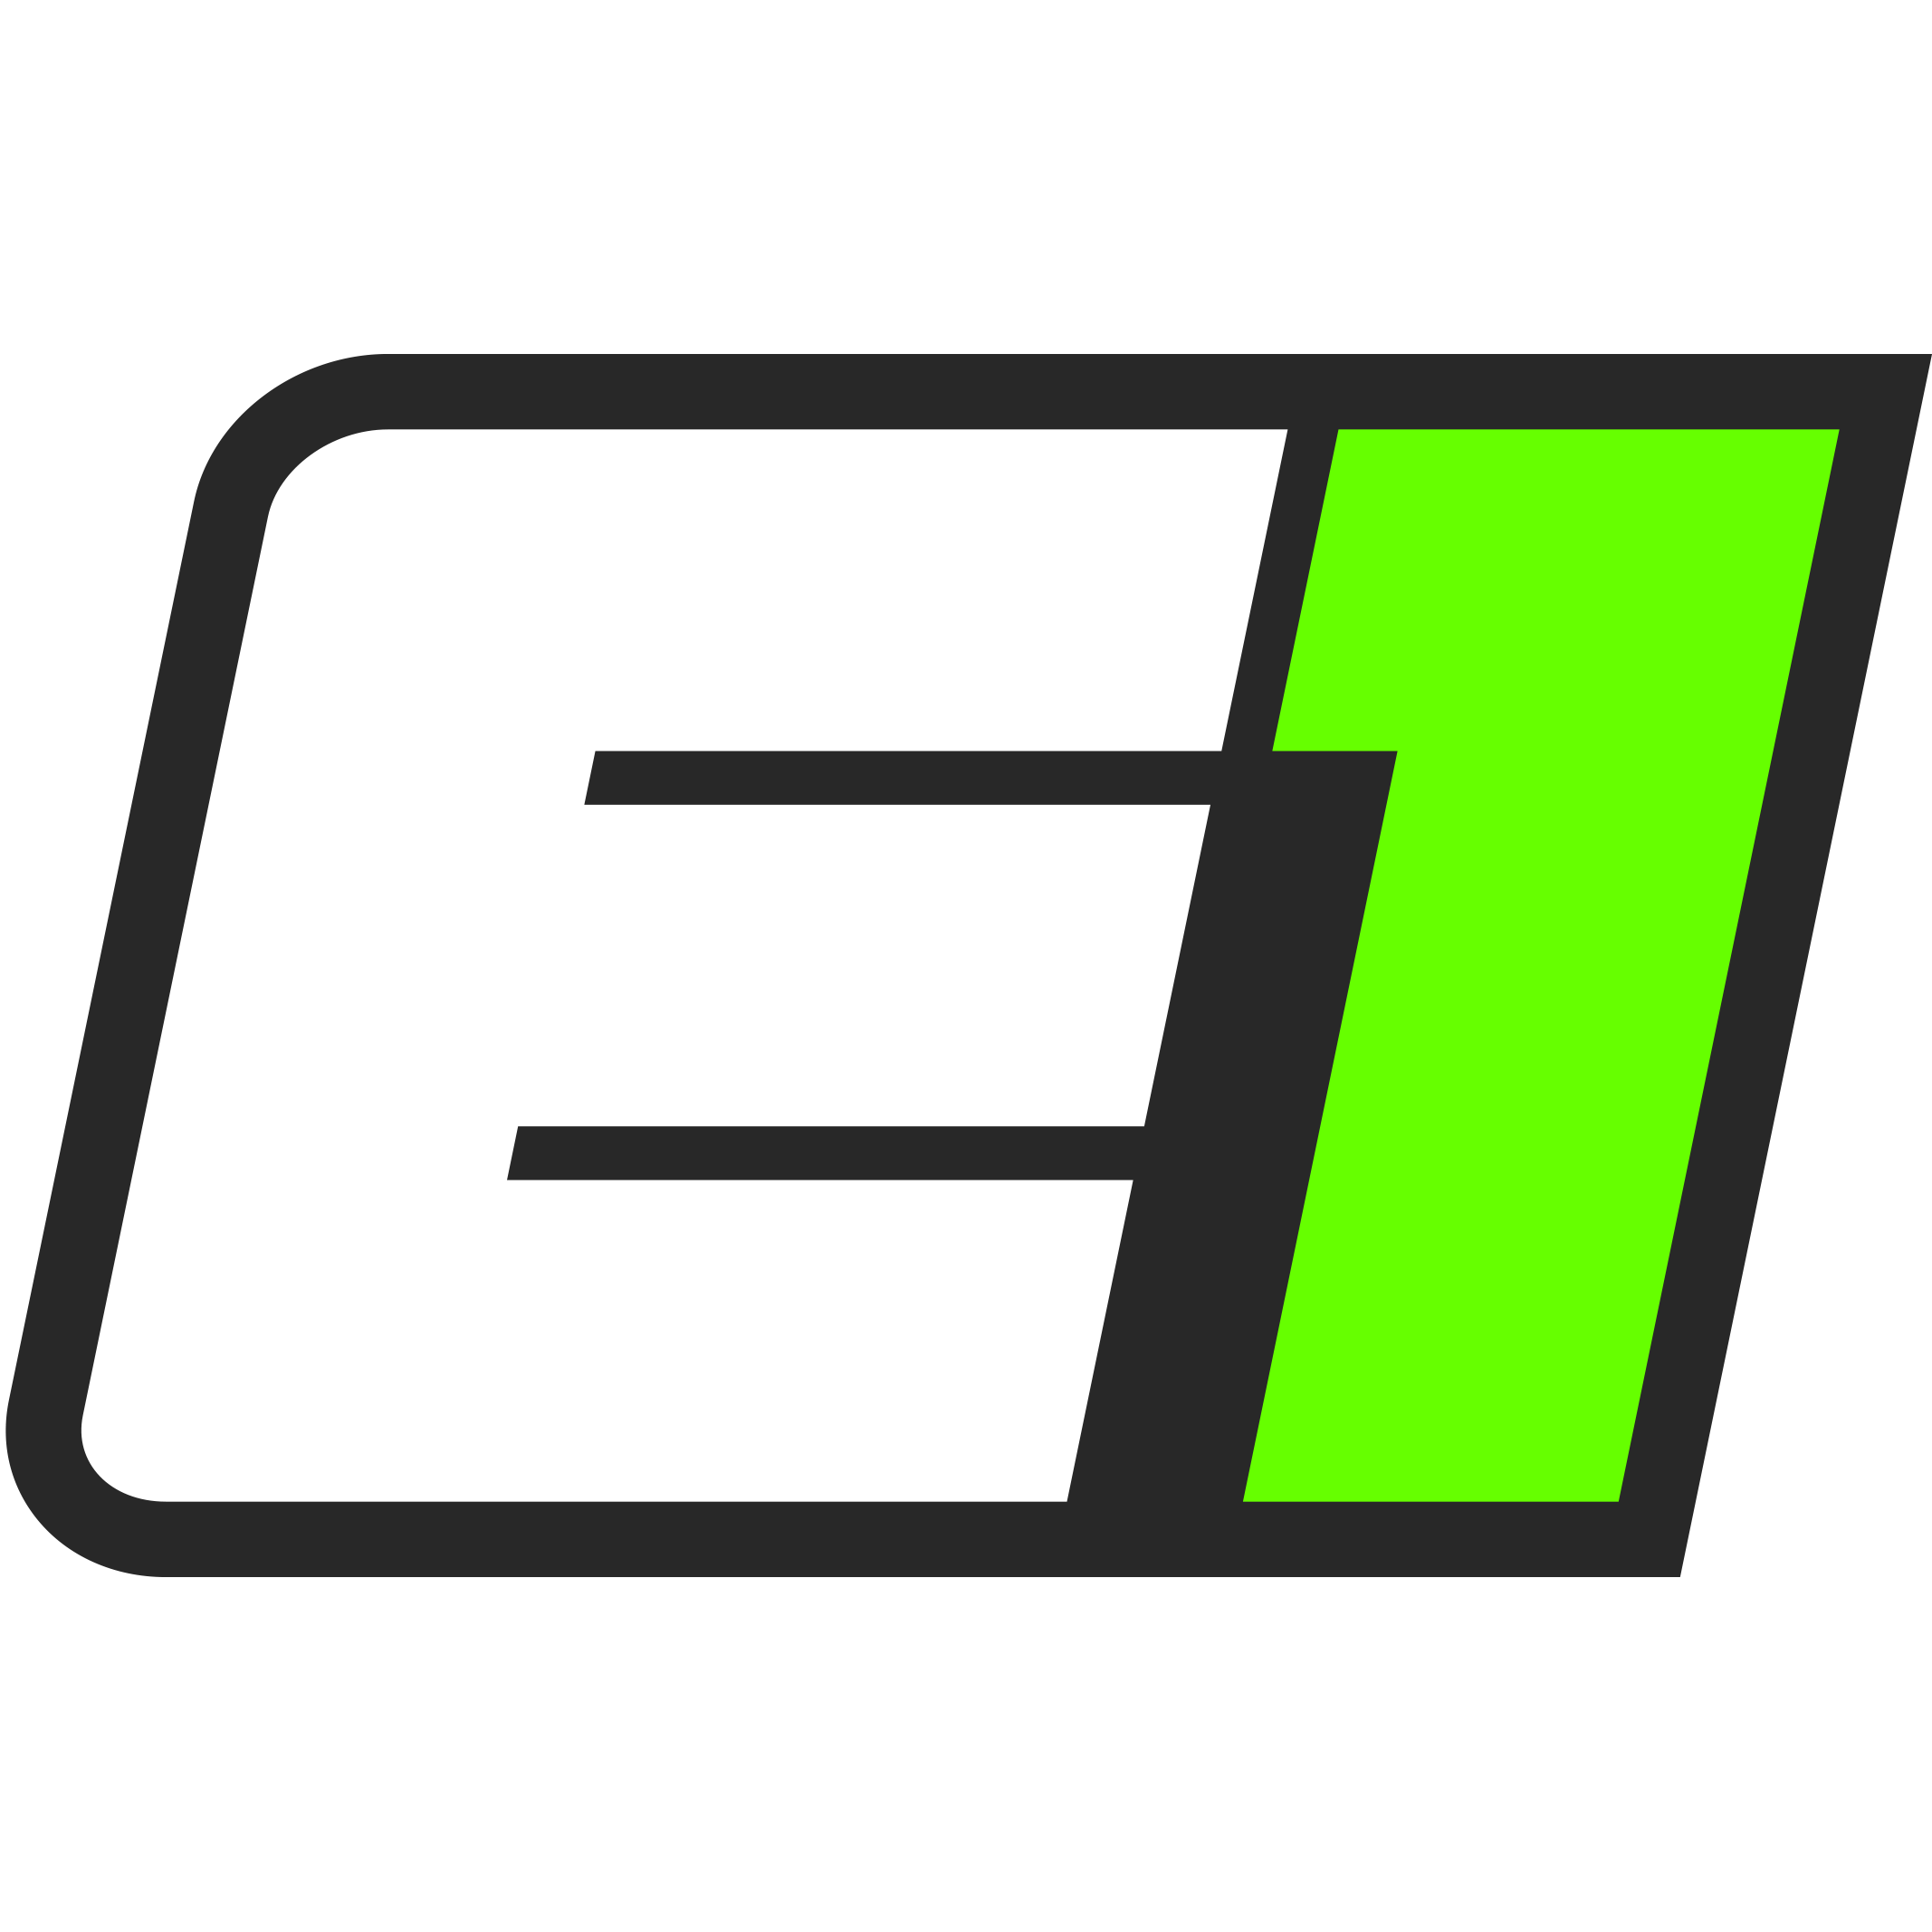 Esports One logo